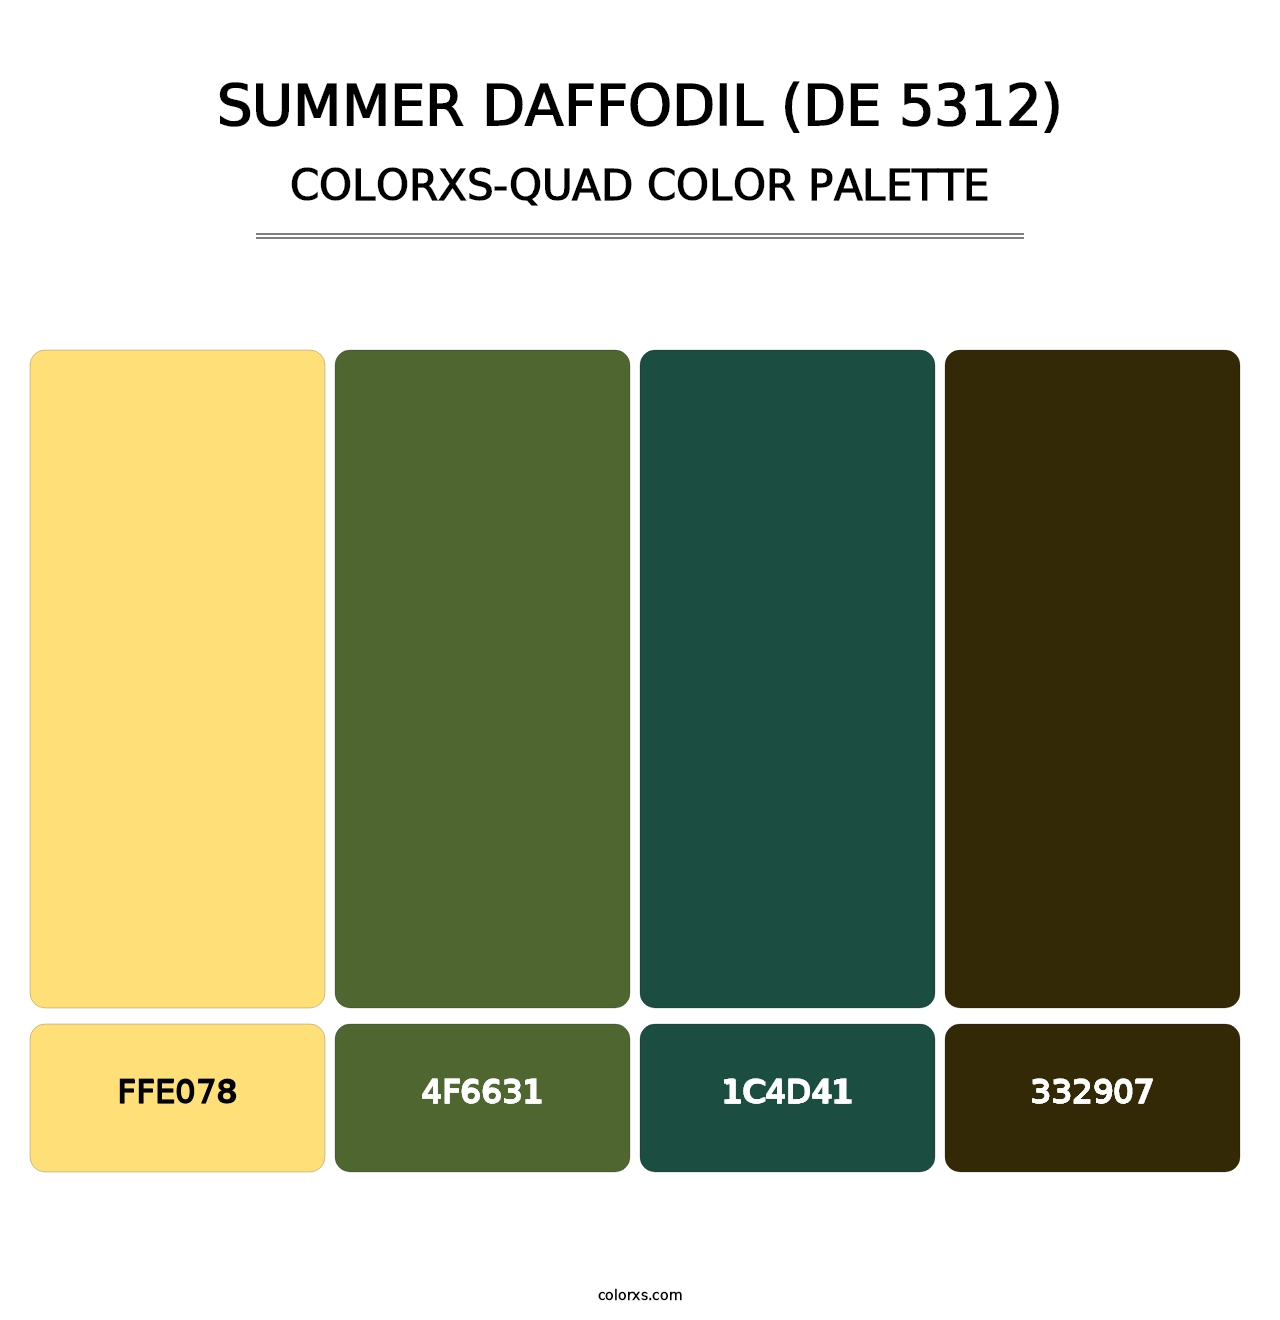 Summer Daffodil (DE 5312) - Colorxs Quad Palette